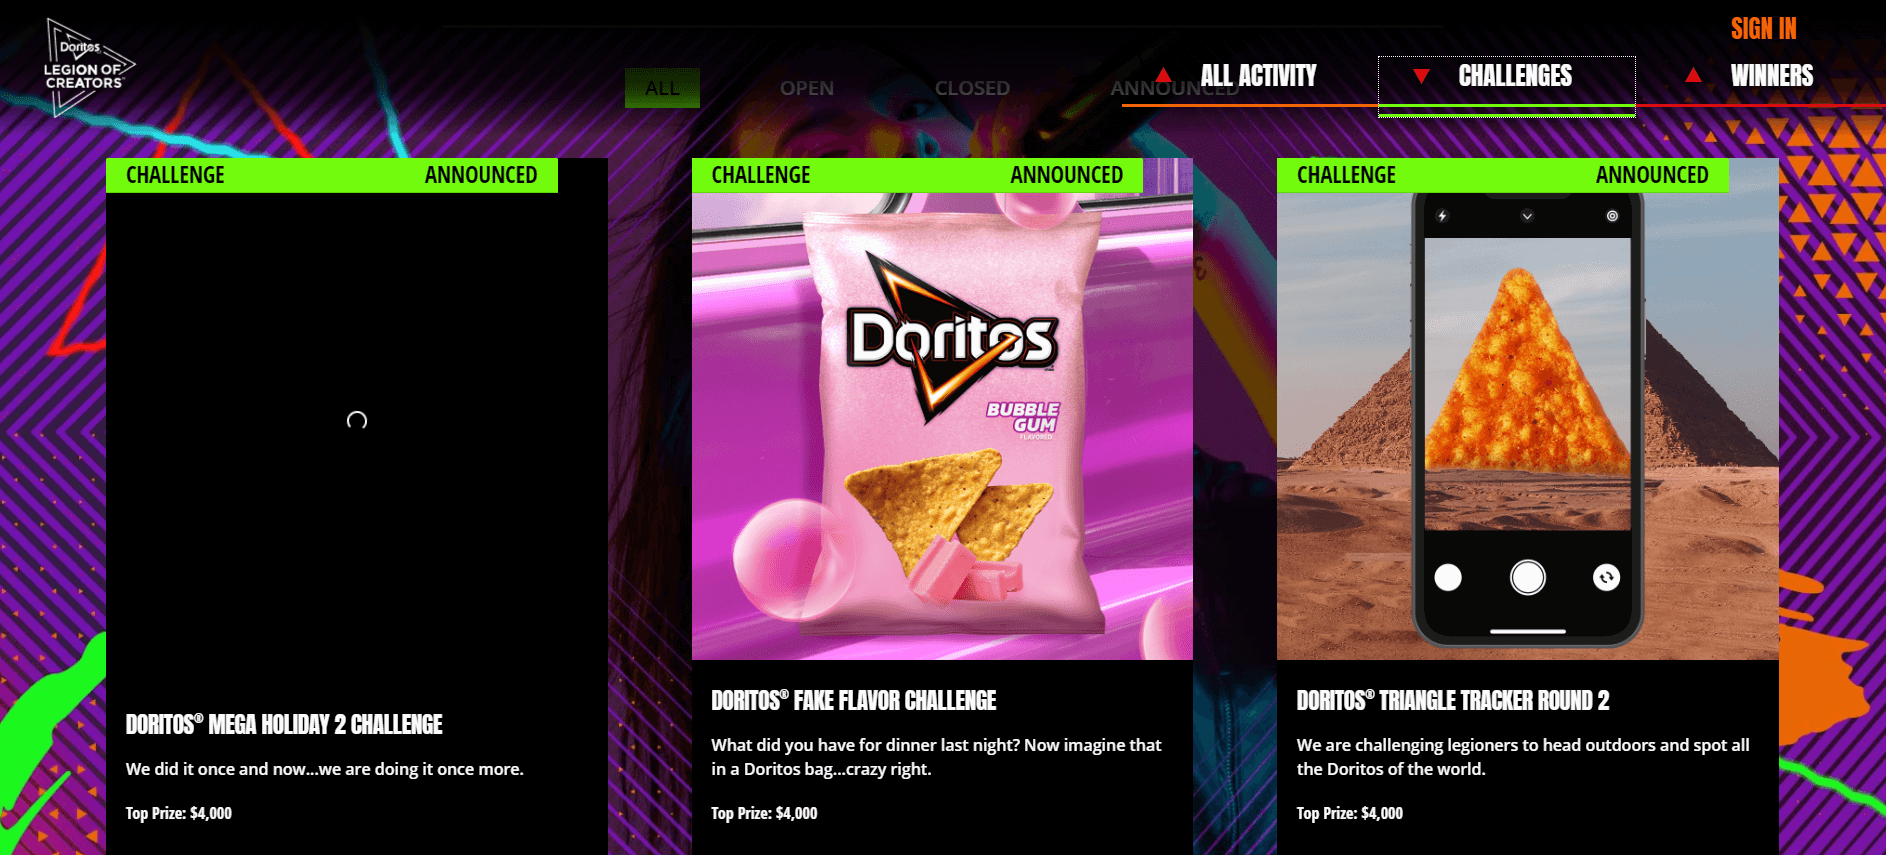 Challenges lancés par la marque Doritos